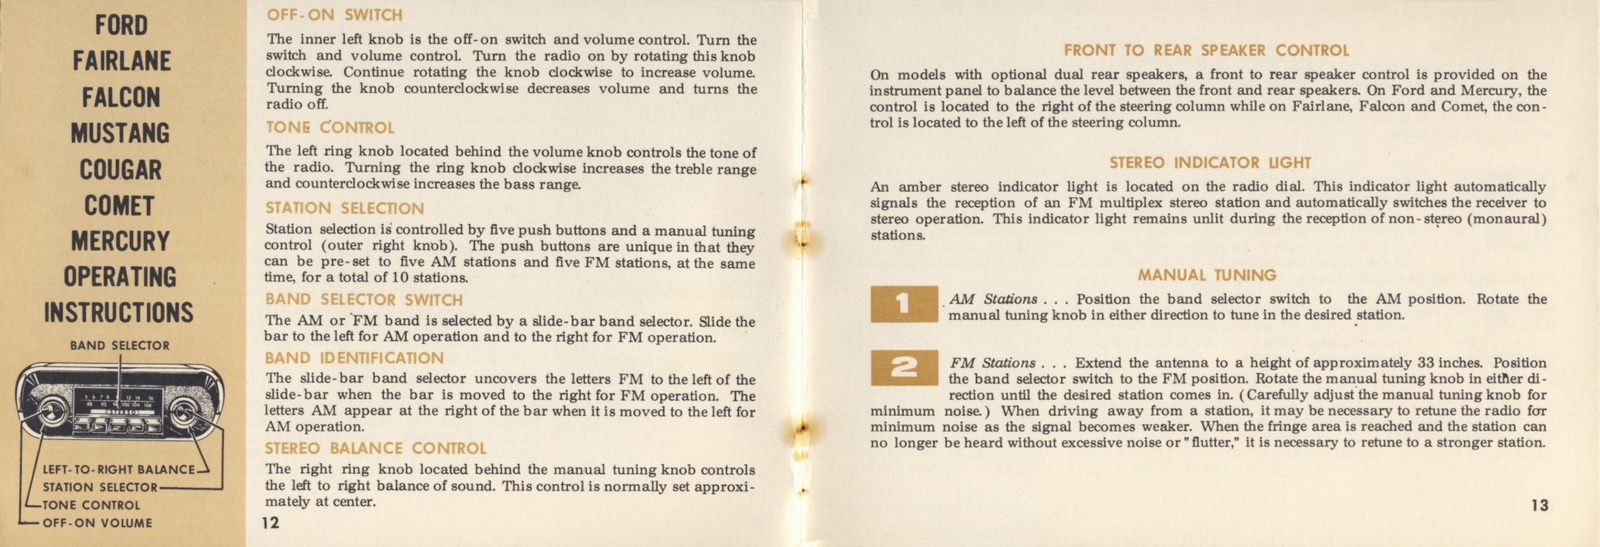 n_1968 Ford Radio Manual-12-13.jpg